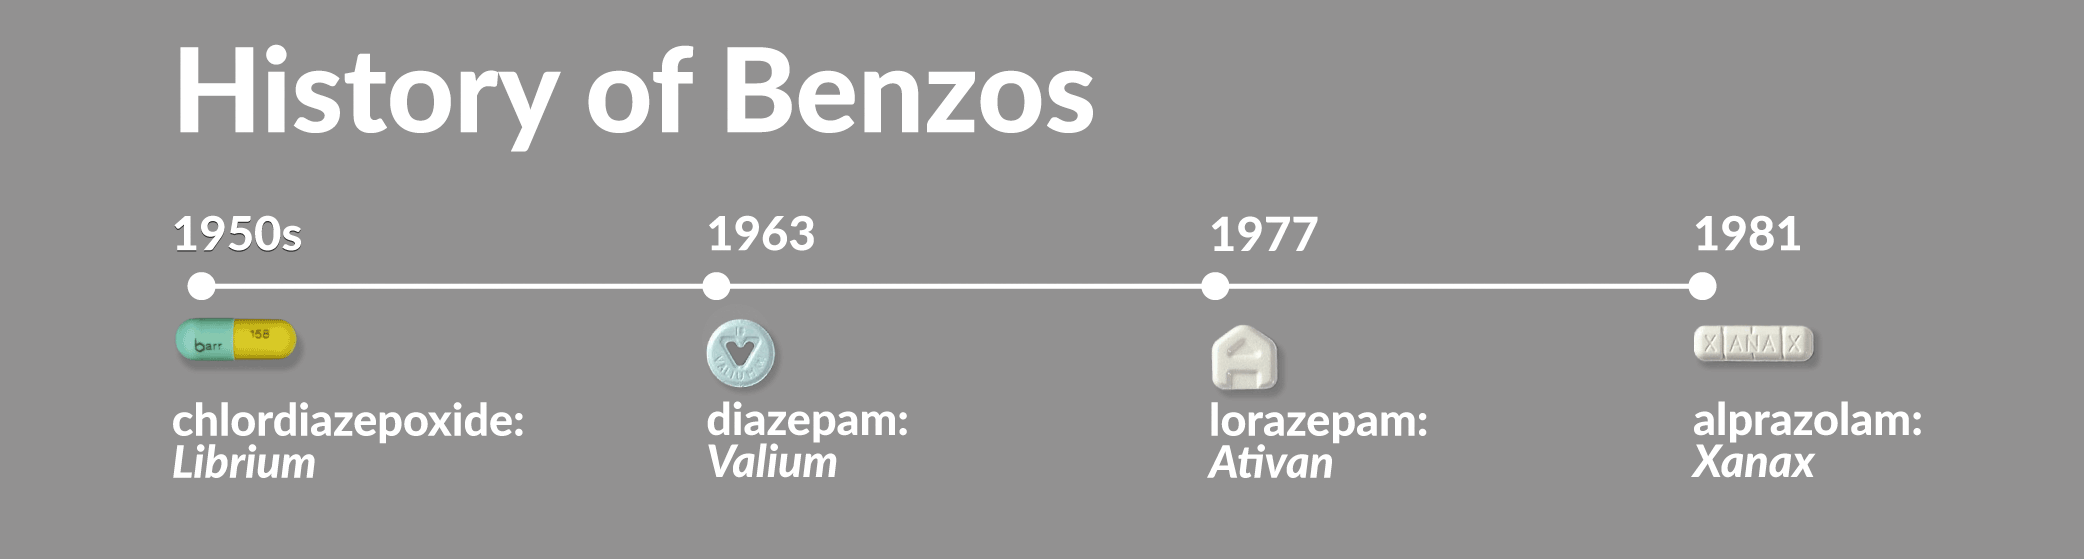 History timeline of benzodiazepines: Librium aka chlordiazepoxide 1950, Valium aka diazepam 1963, Ativan aka lorazepam 1977 and Xanax aka 1981.